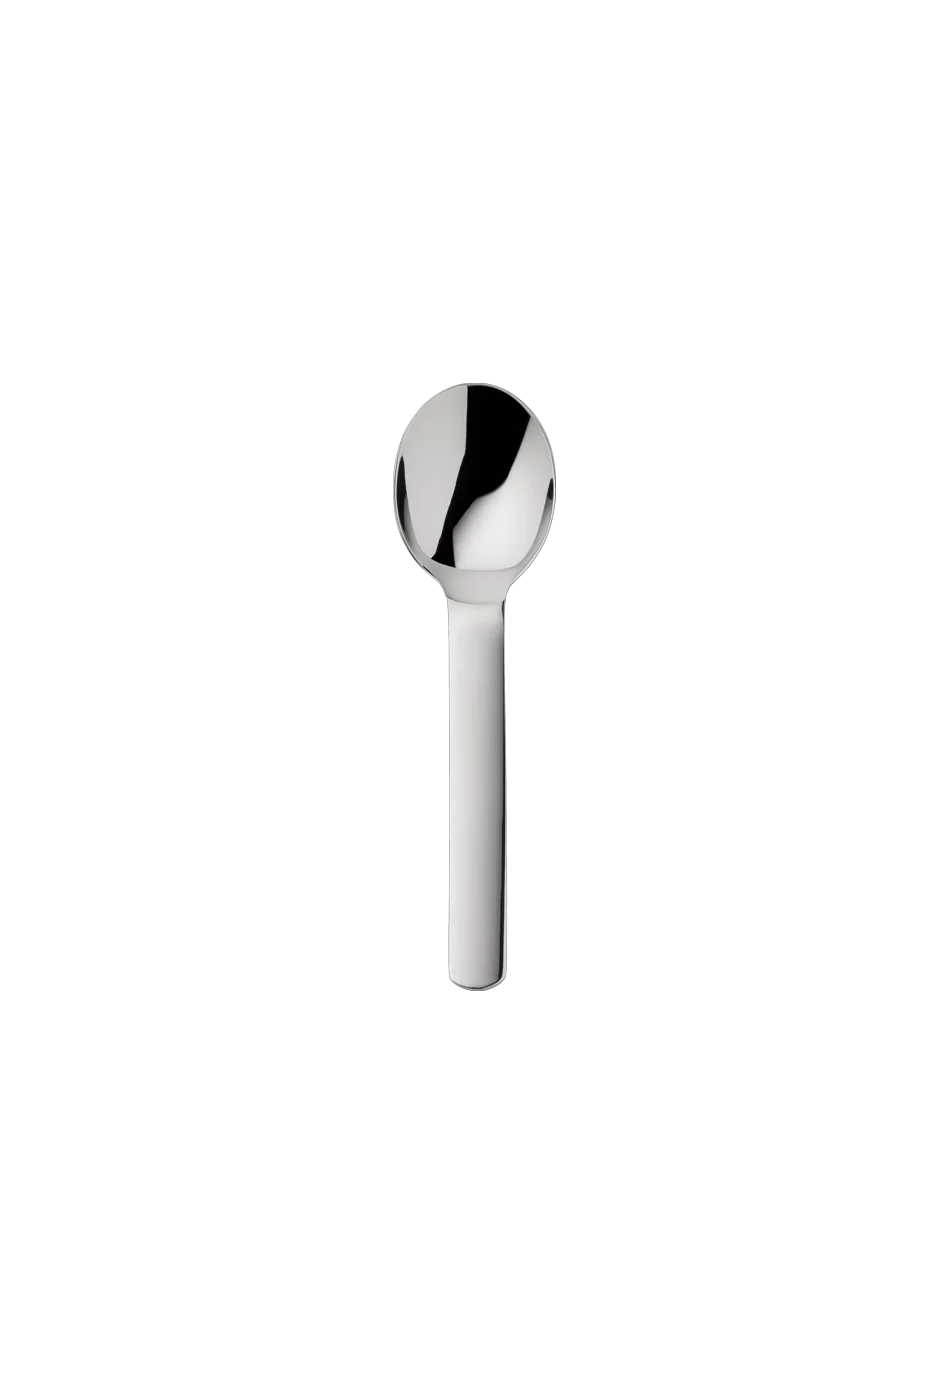 Topos Sugar Spoon (18/8 stainless steel)